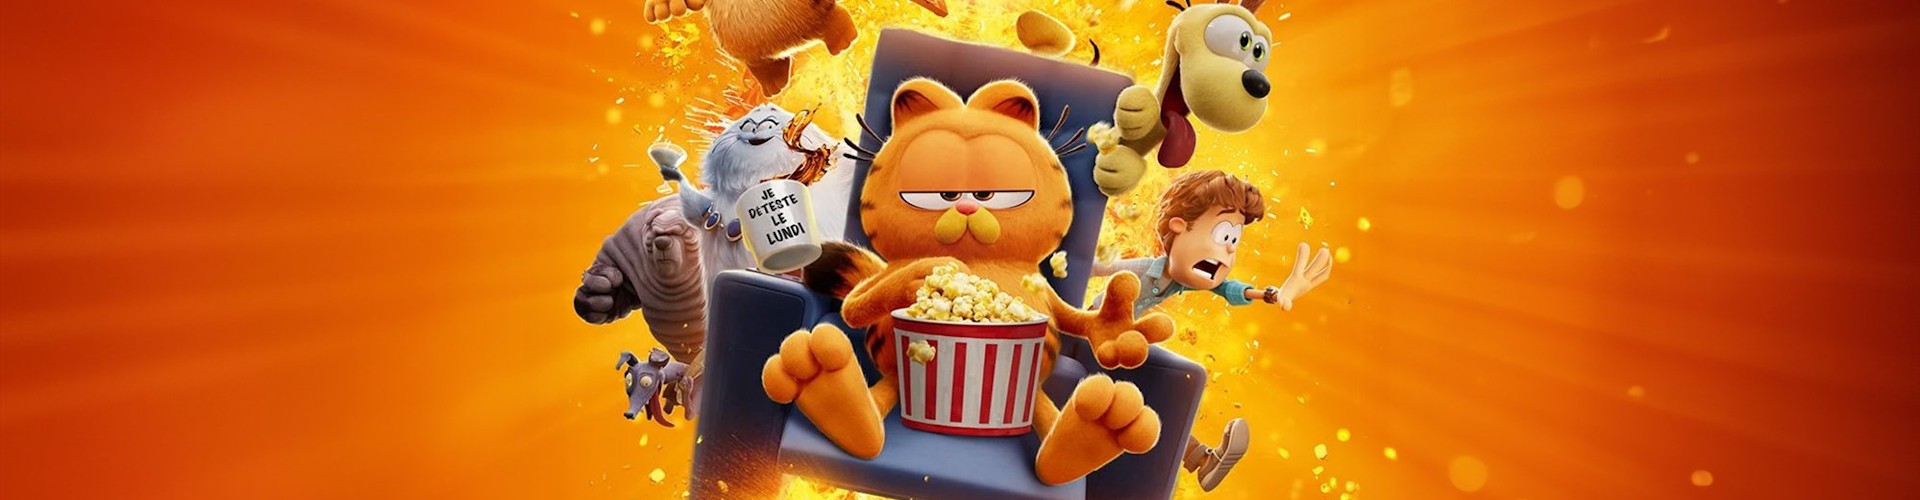 Garfield : Héros Malgré lui (AVP)